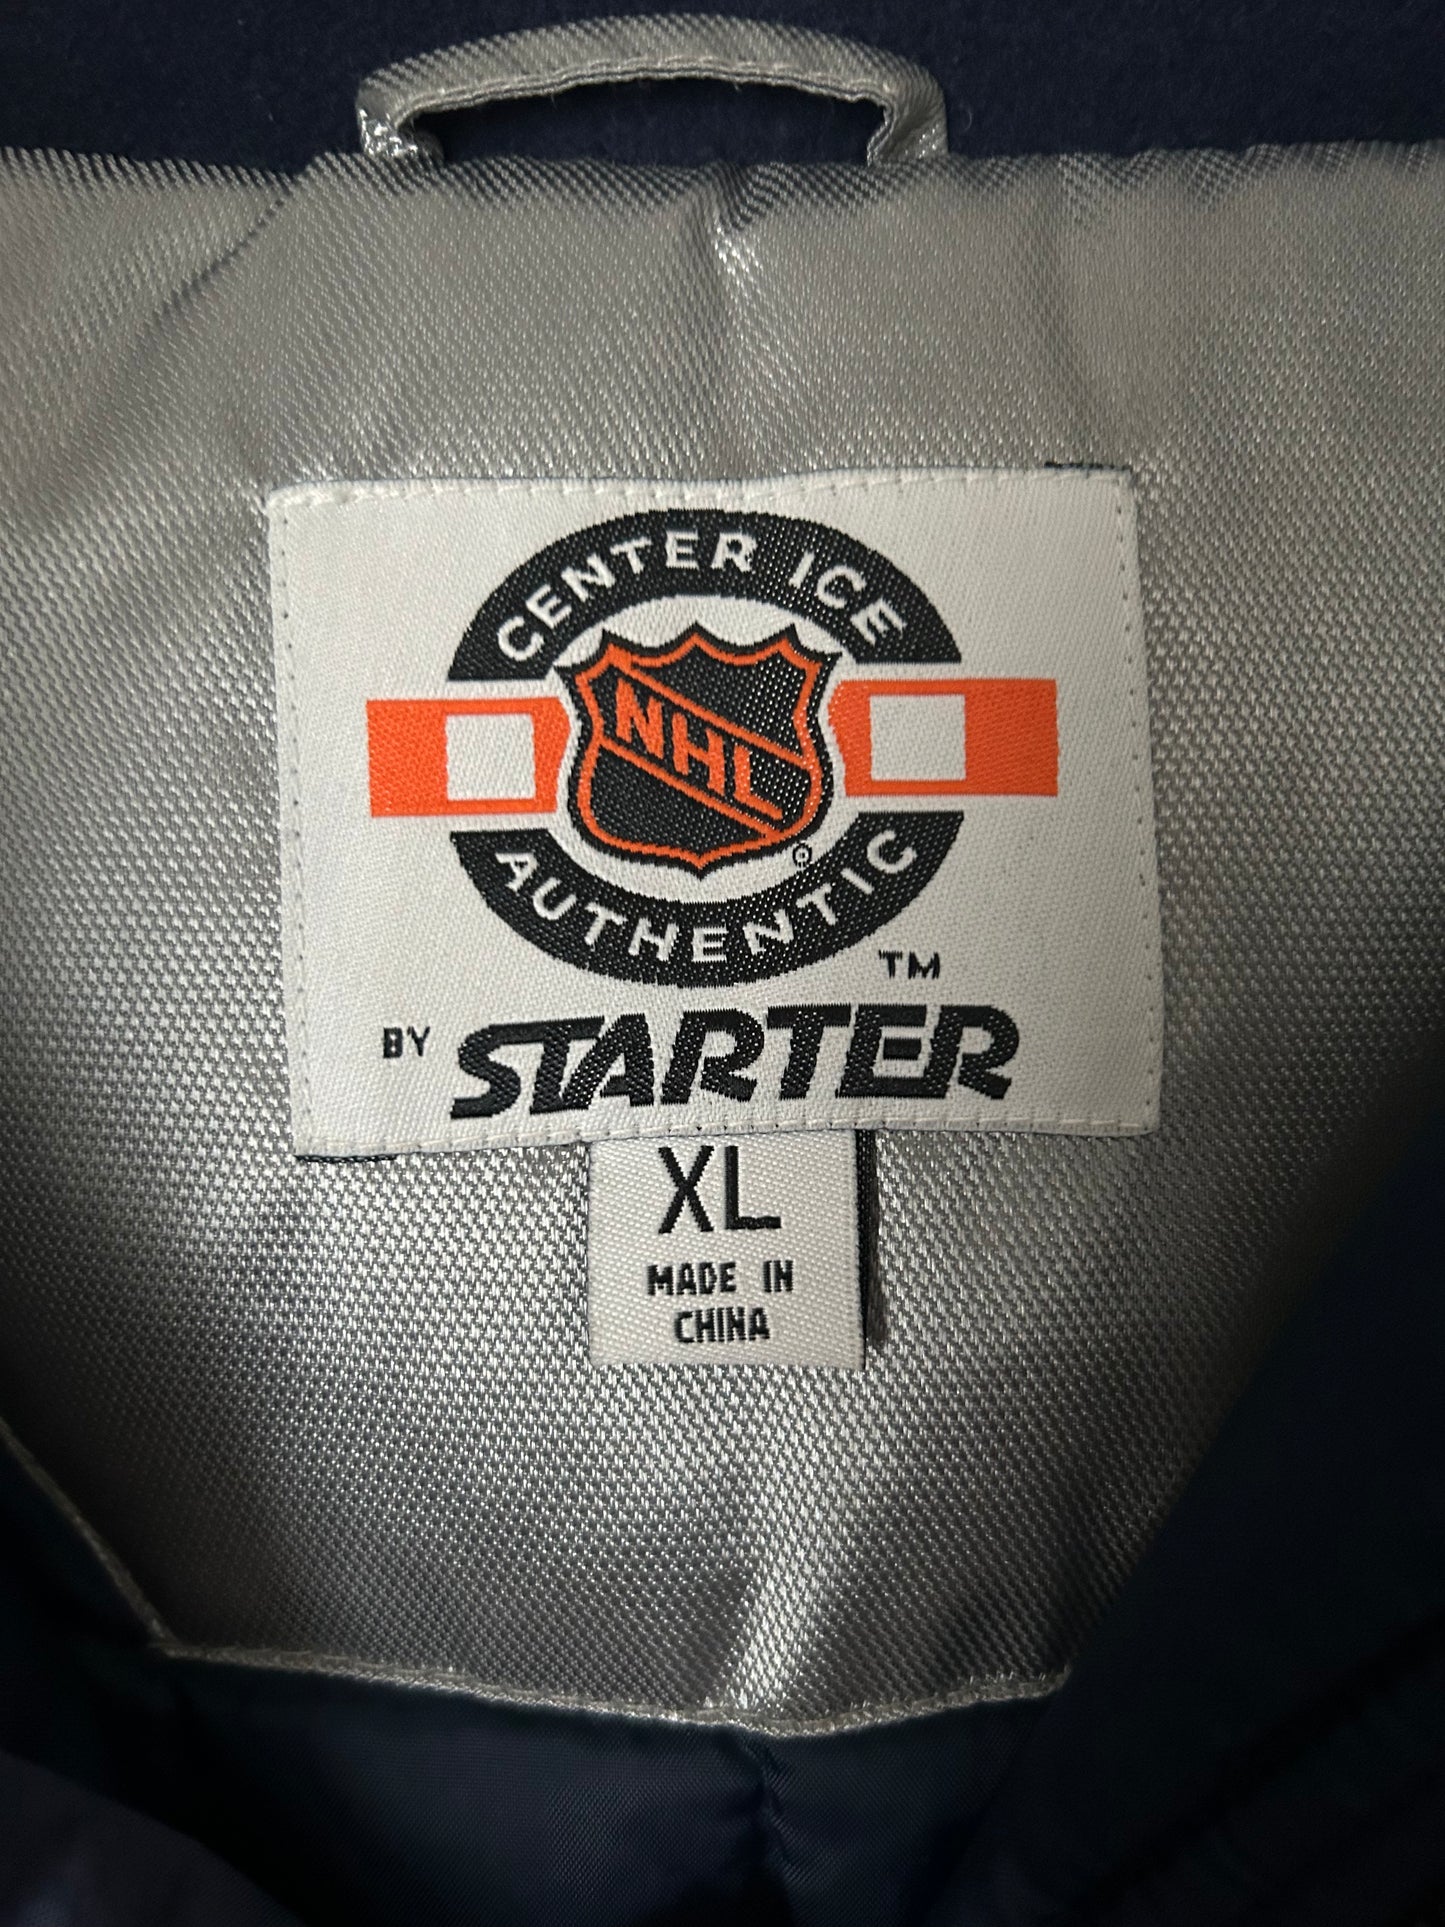 Starter x NHL Center Ice Authentic Nashville Predators Puffer Jacket - XL